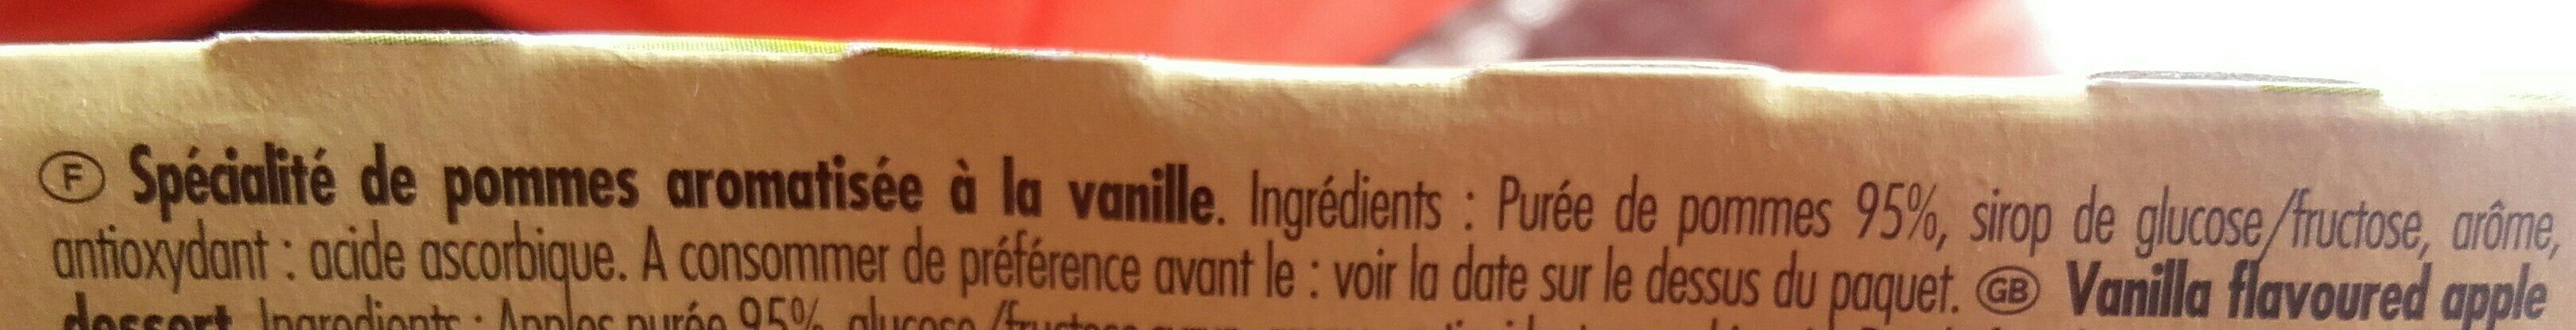 Pomme vanille - Ingredients - fr